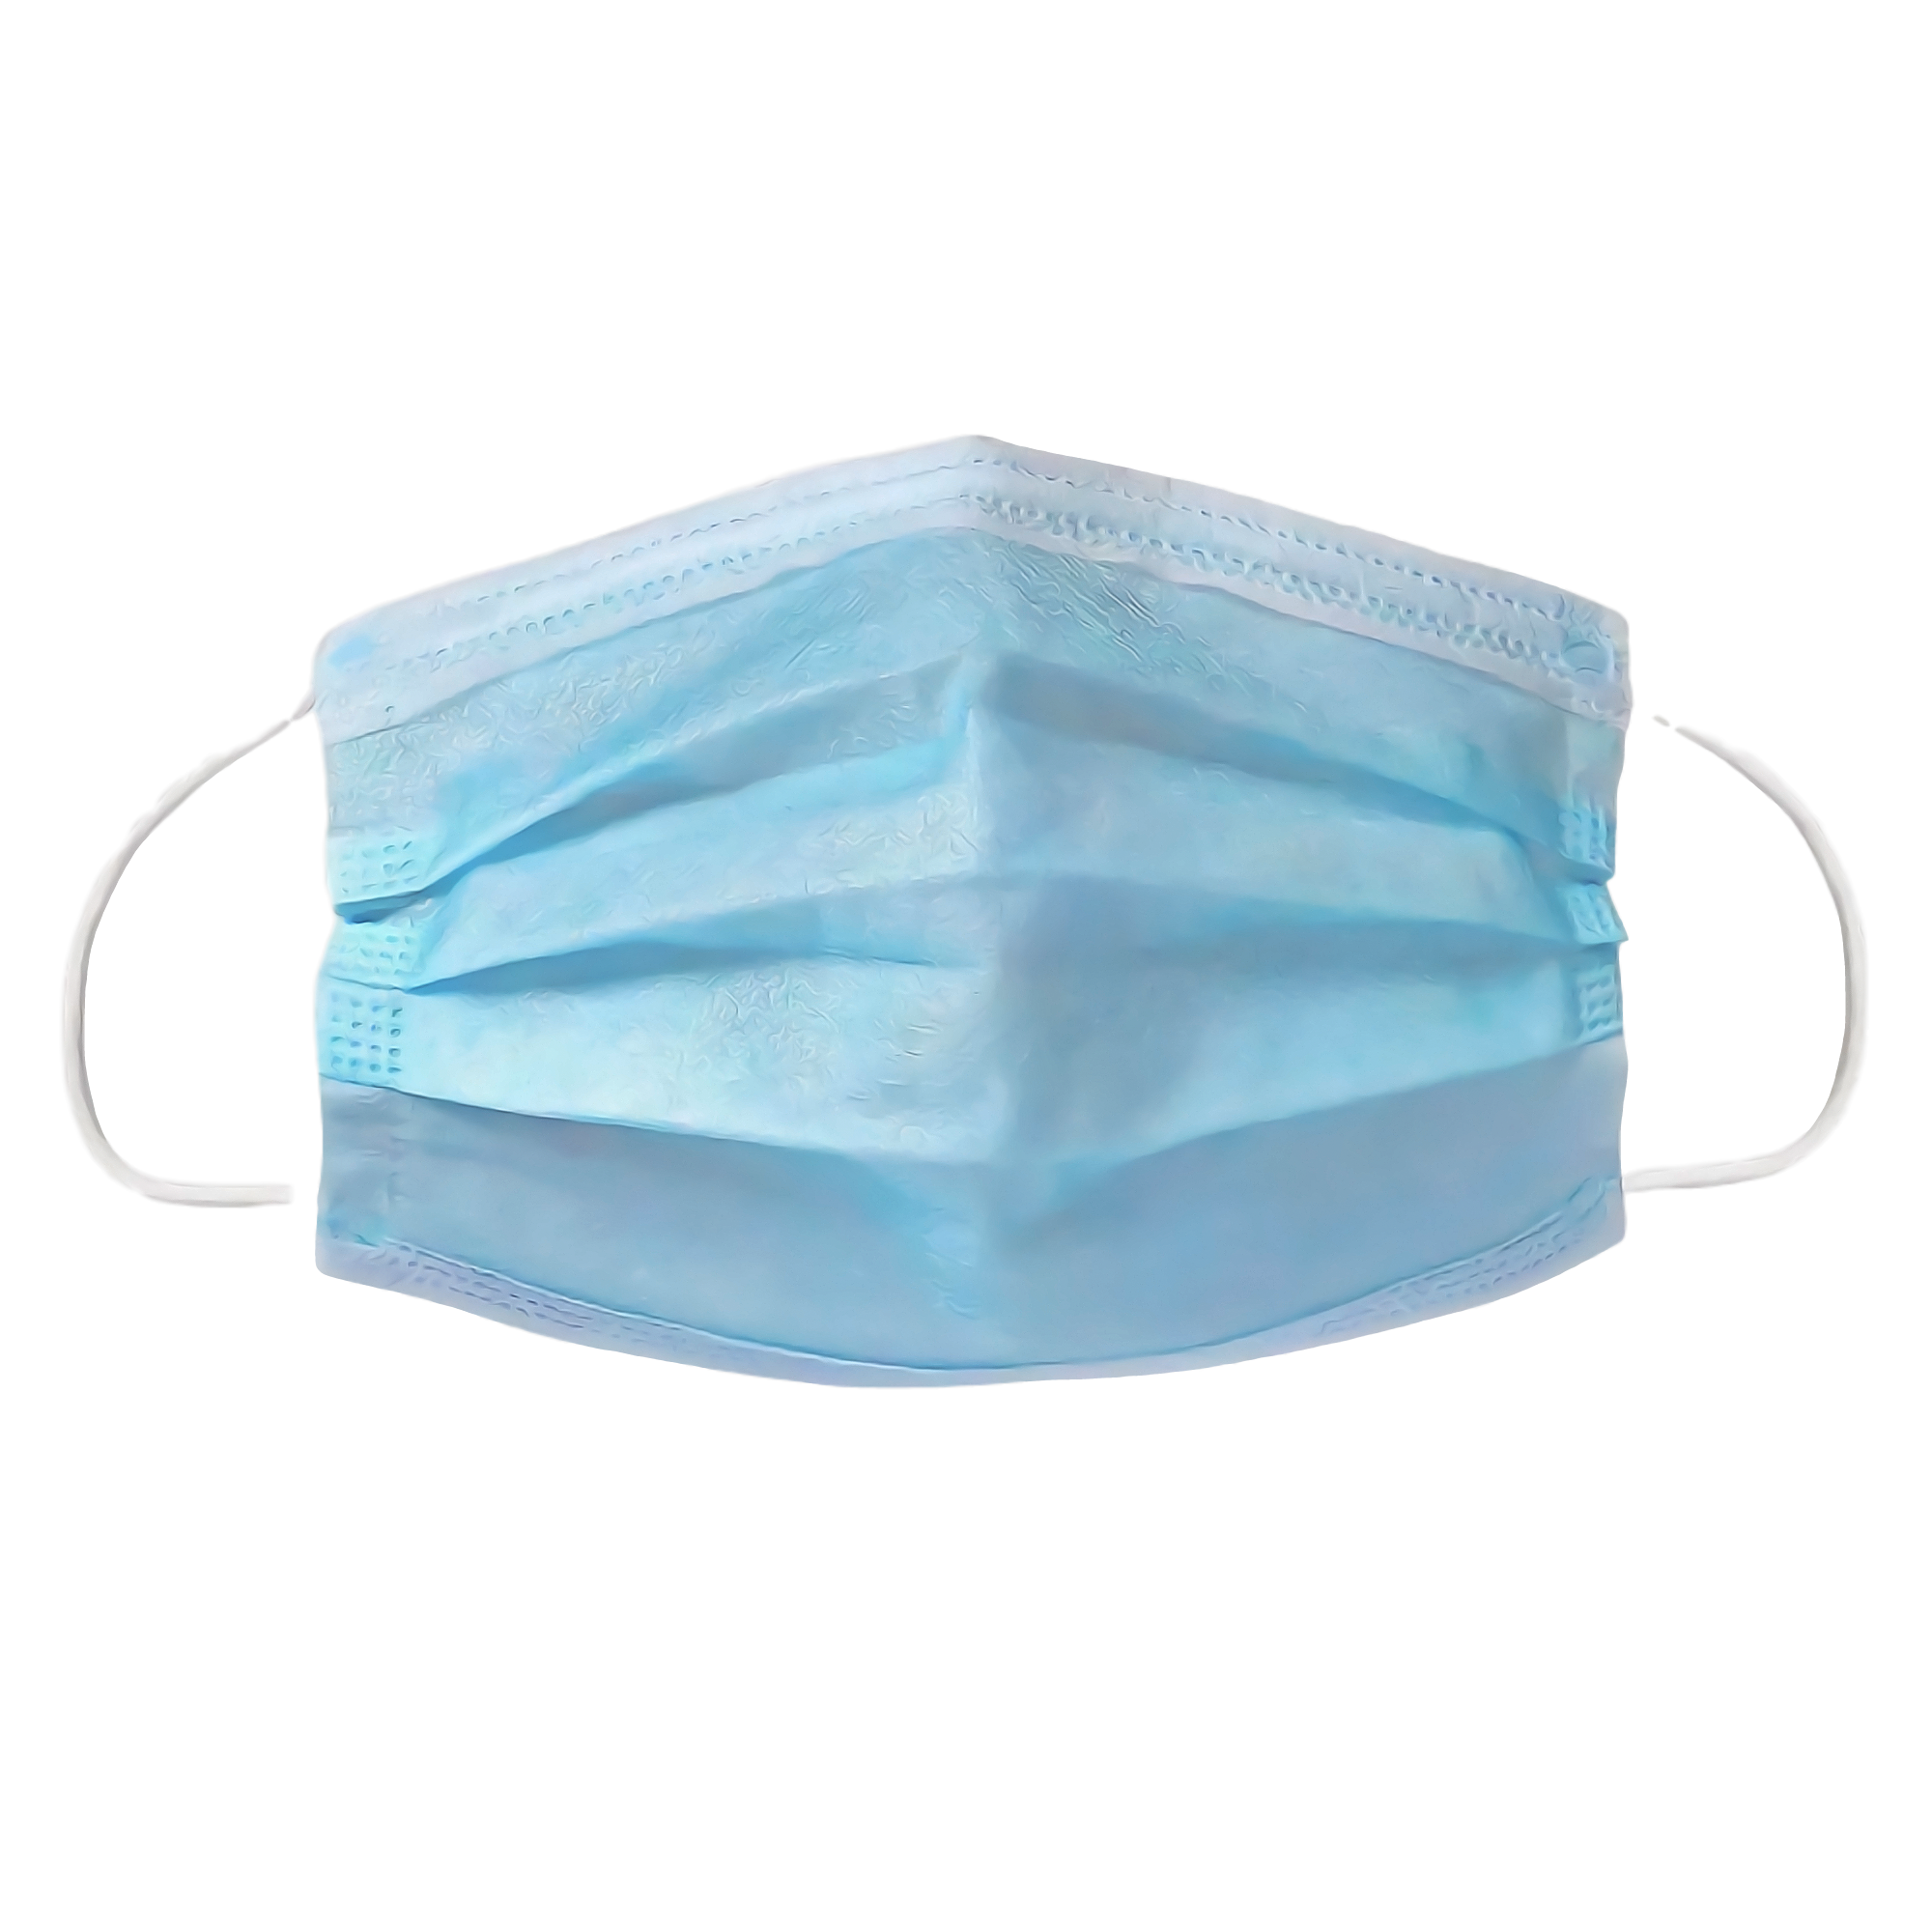 Coronavirus Mask Download Transparent PNG Image